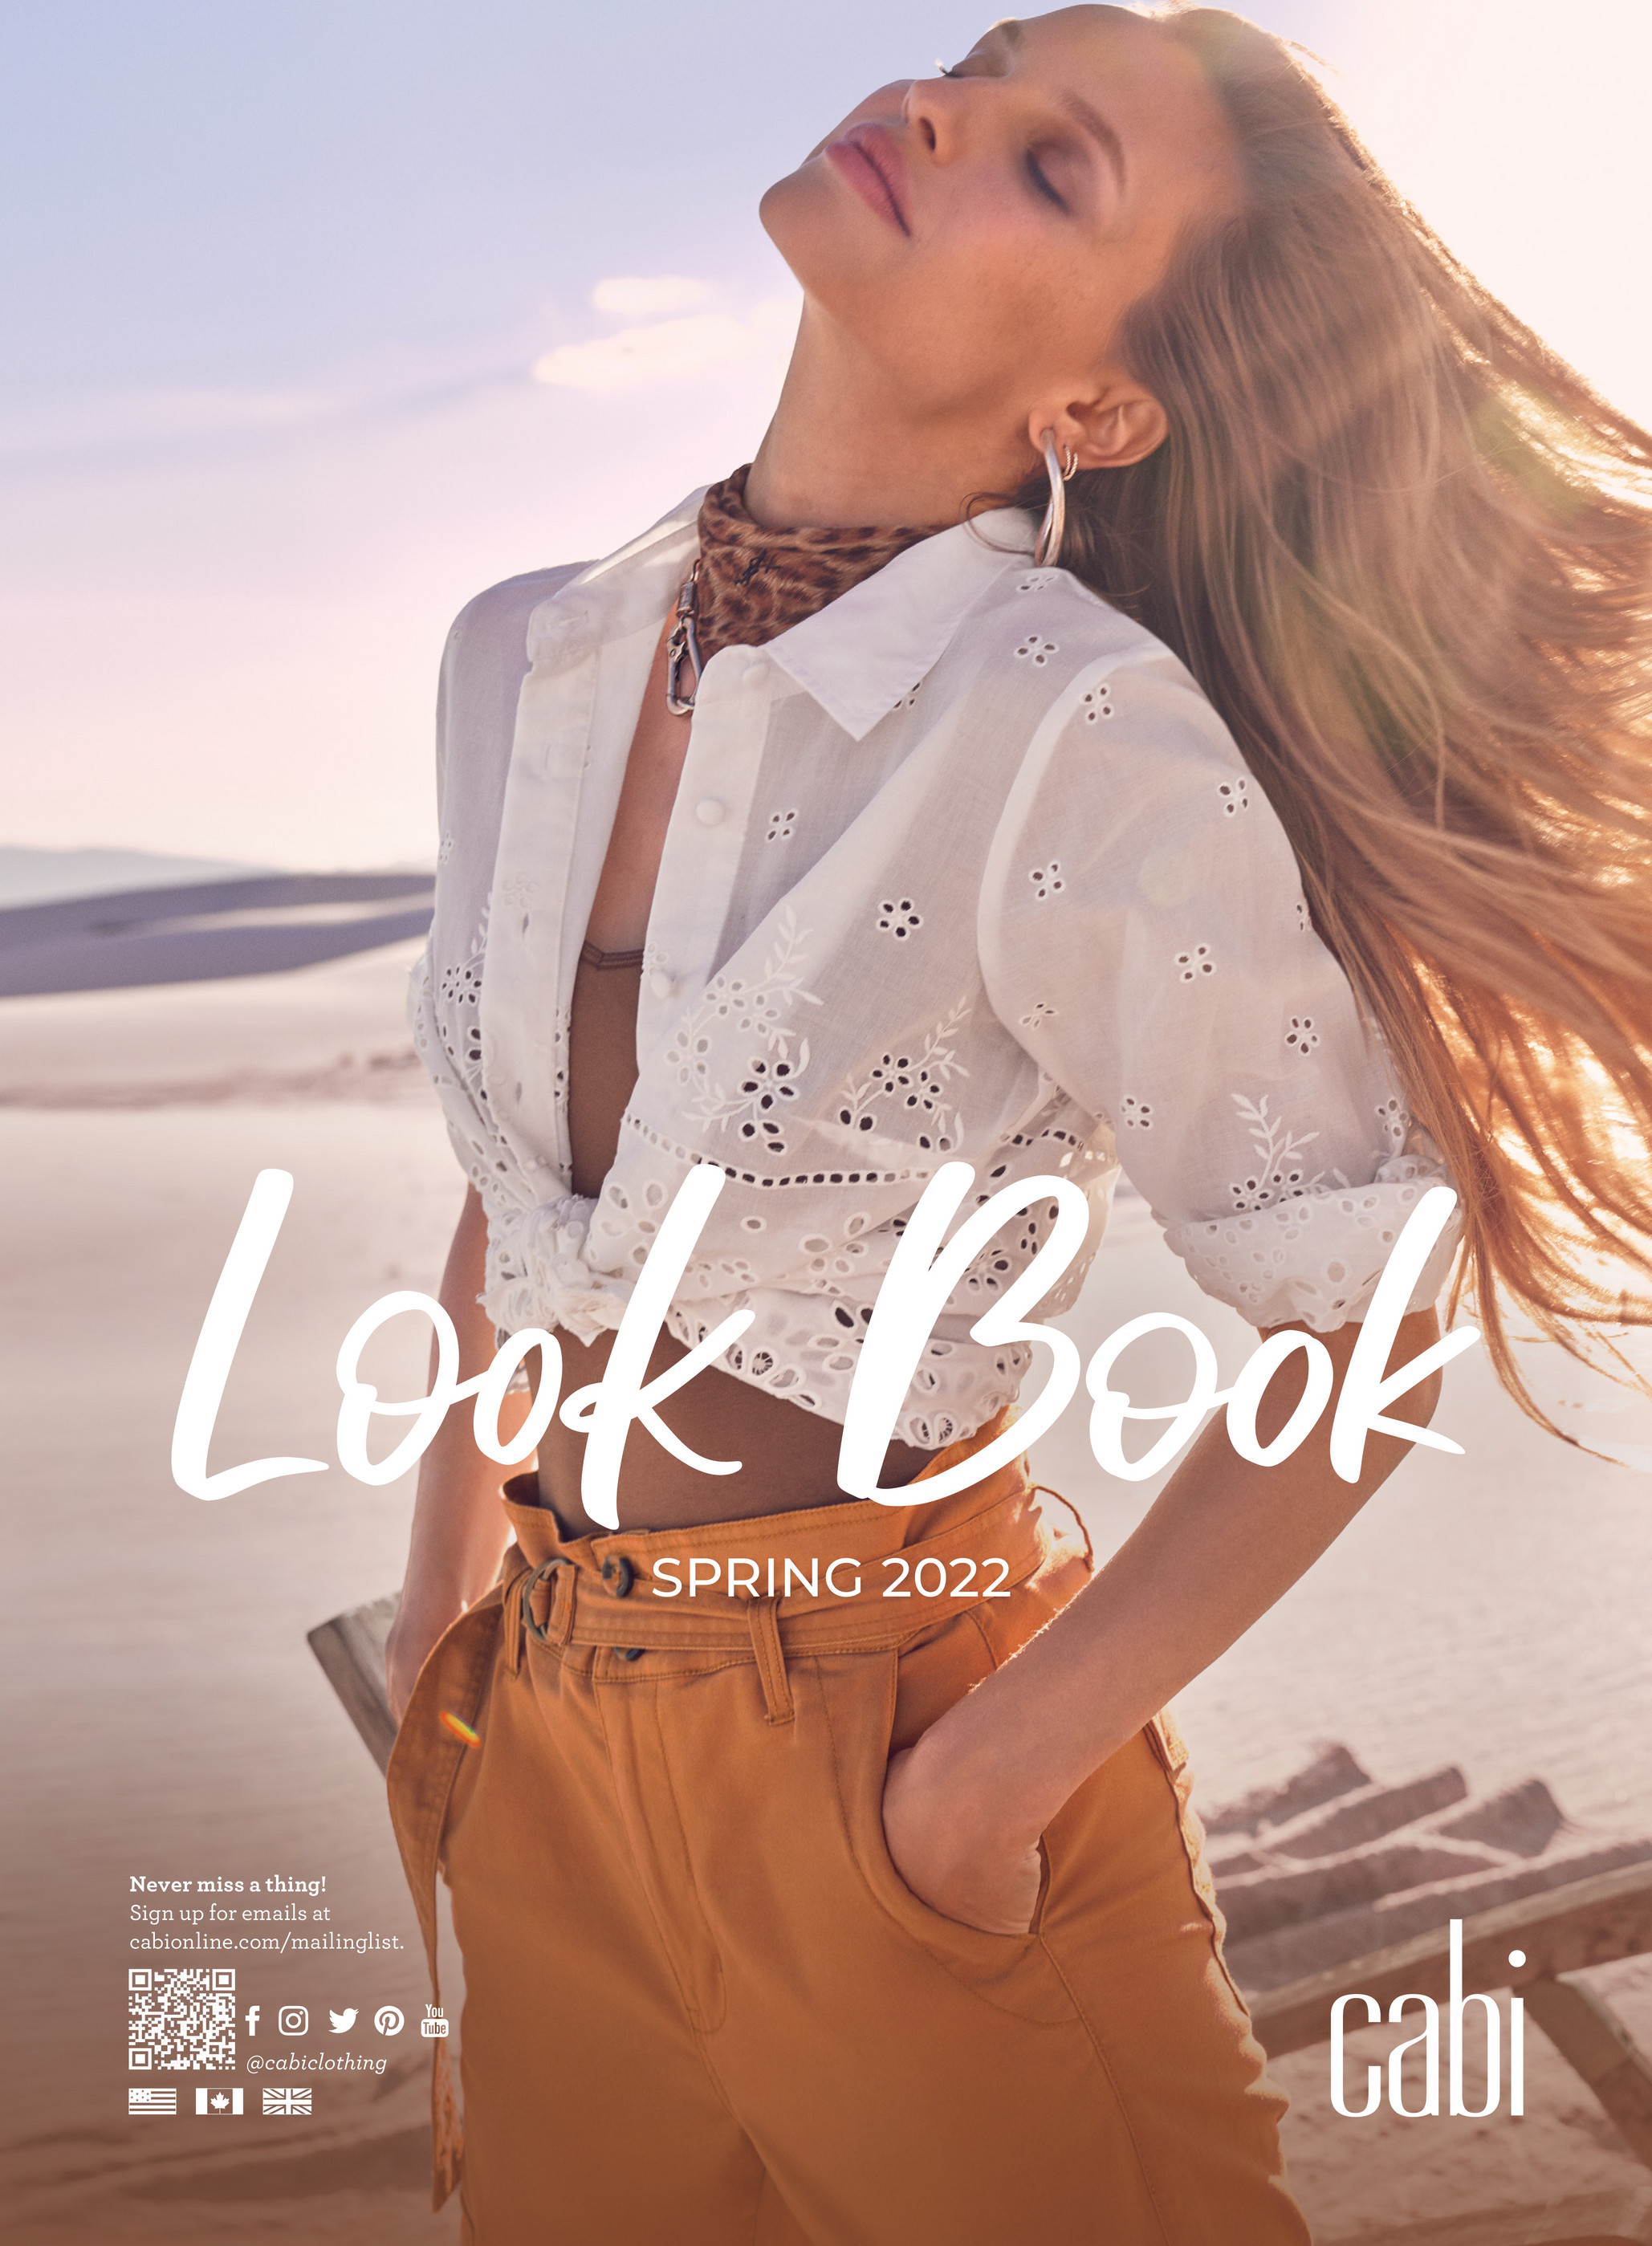 Cabi Spring 2022 Lookbook Pdf, Featured items: Take 5 Topper, Kelly Top,  Plait Belt, 5 th Avenue Jean.